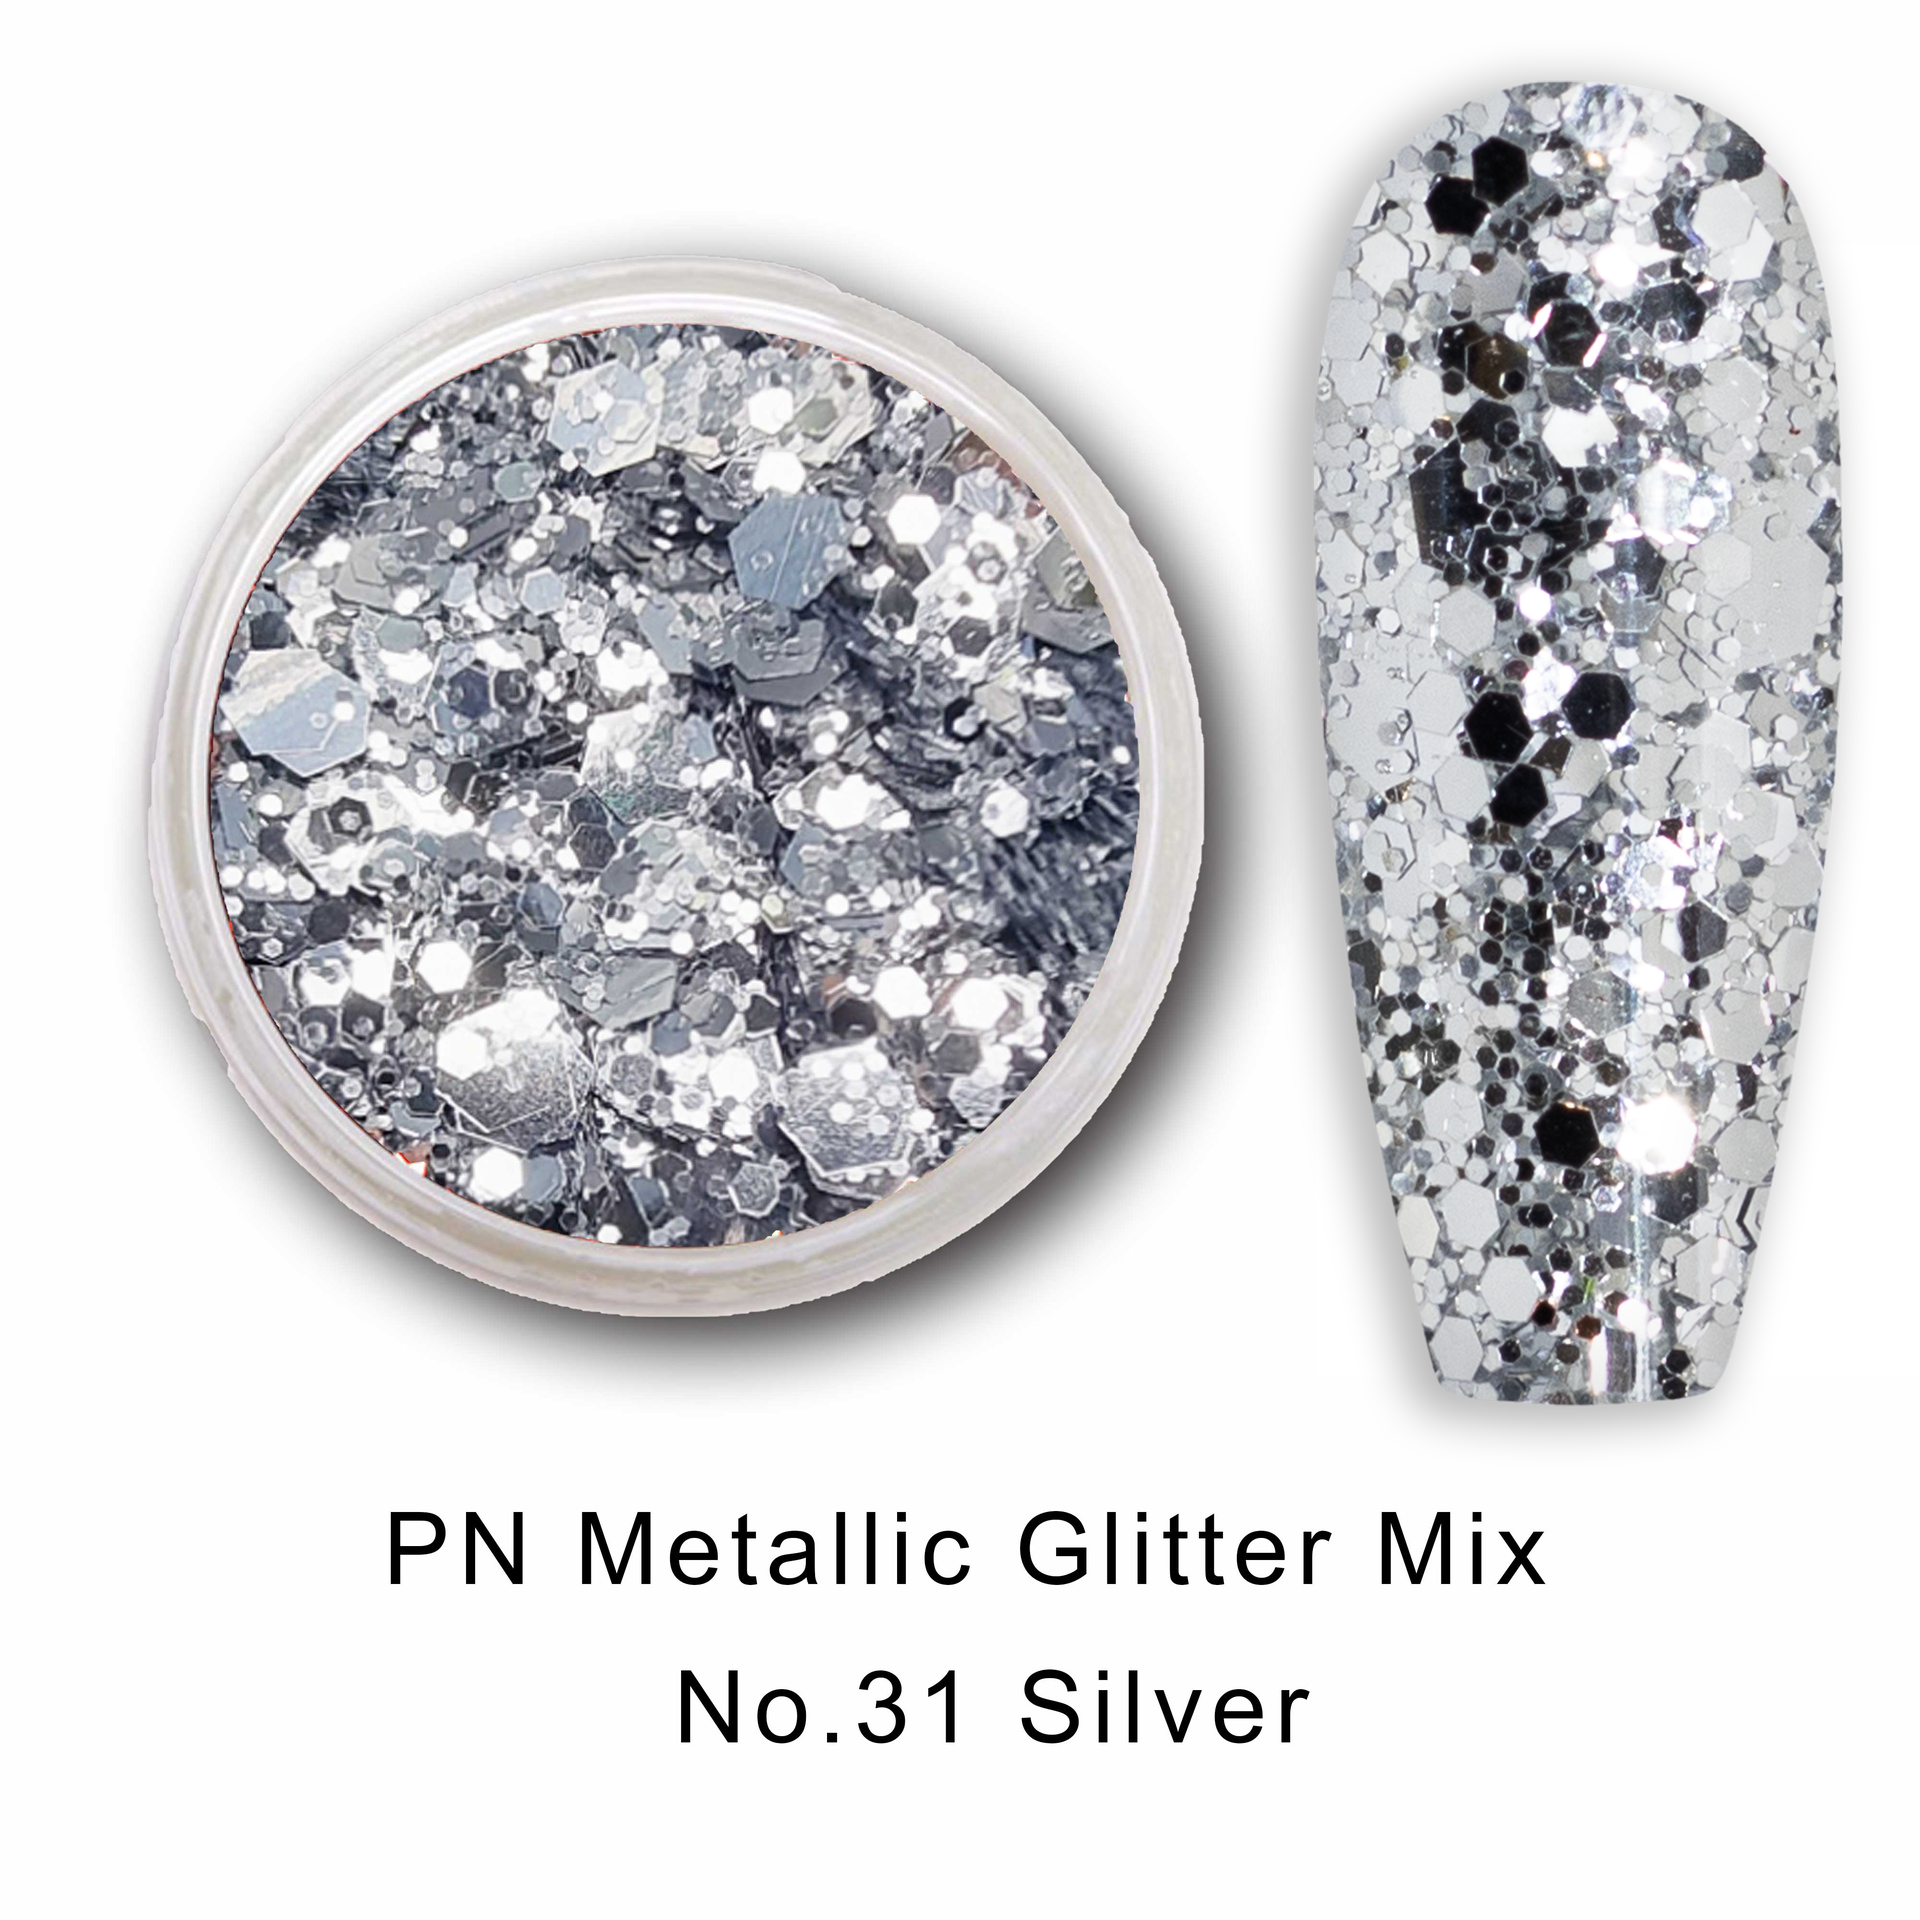 PN Metallic glitter mix No.31 Silver